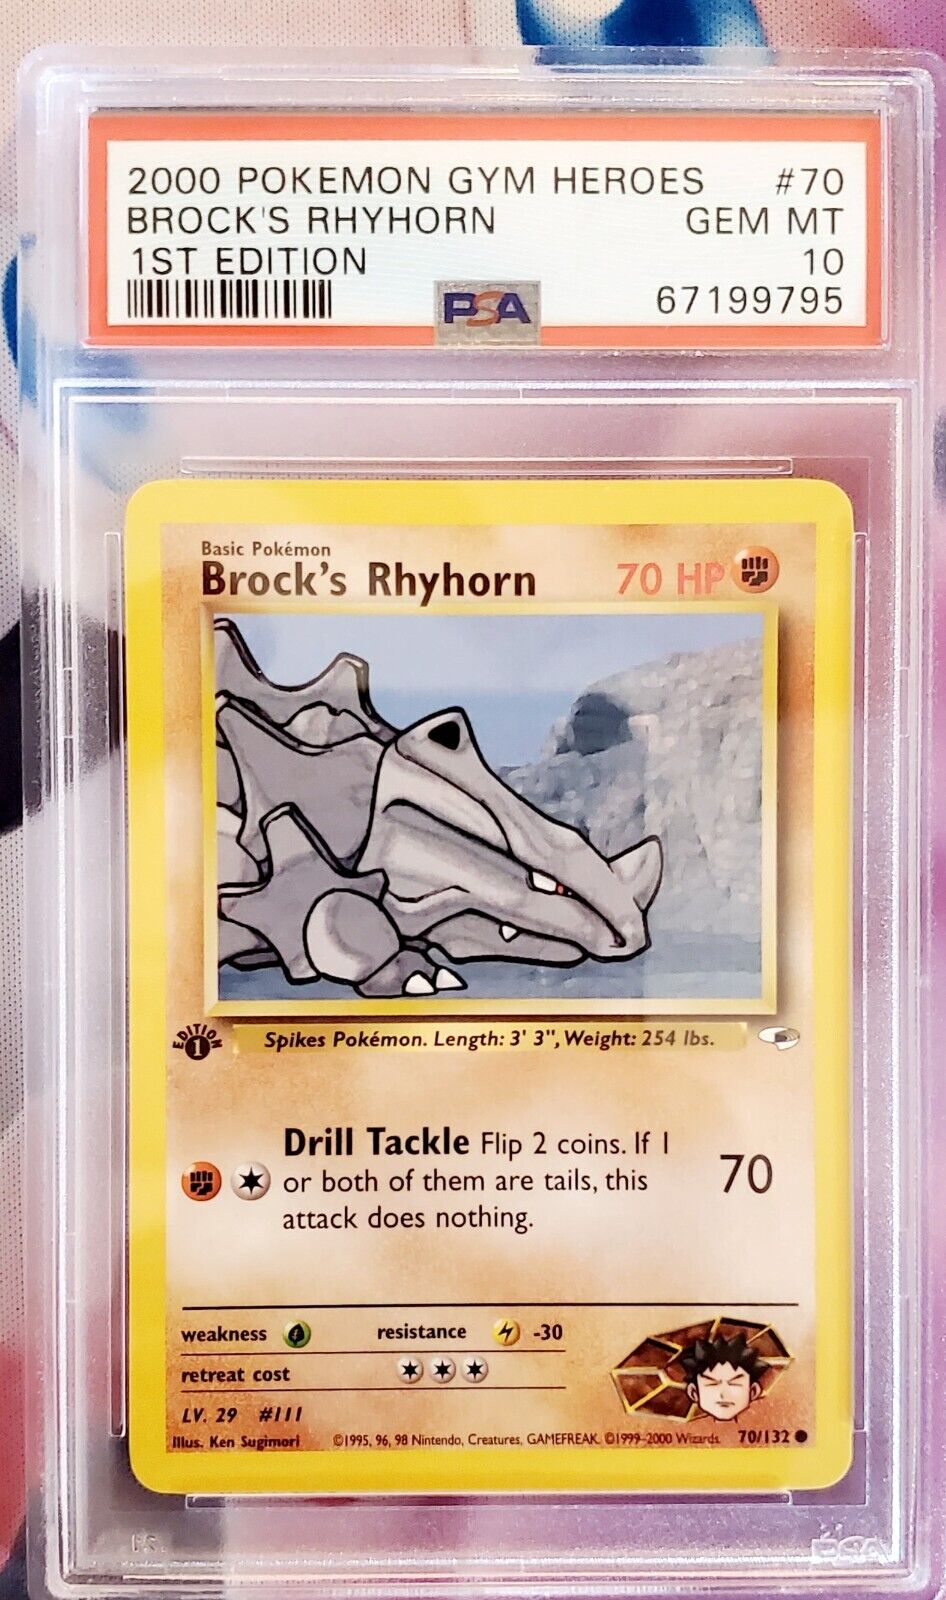 Brock's Rhyhorn #70 Gym Heroes 1st Edition - Pokemon Card WOTC - PSA Gem Mint 10